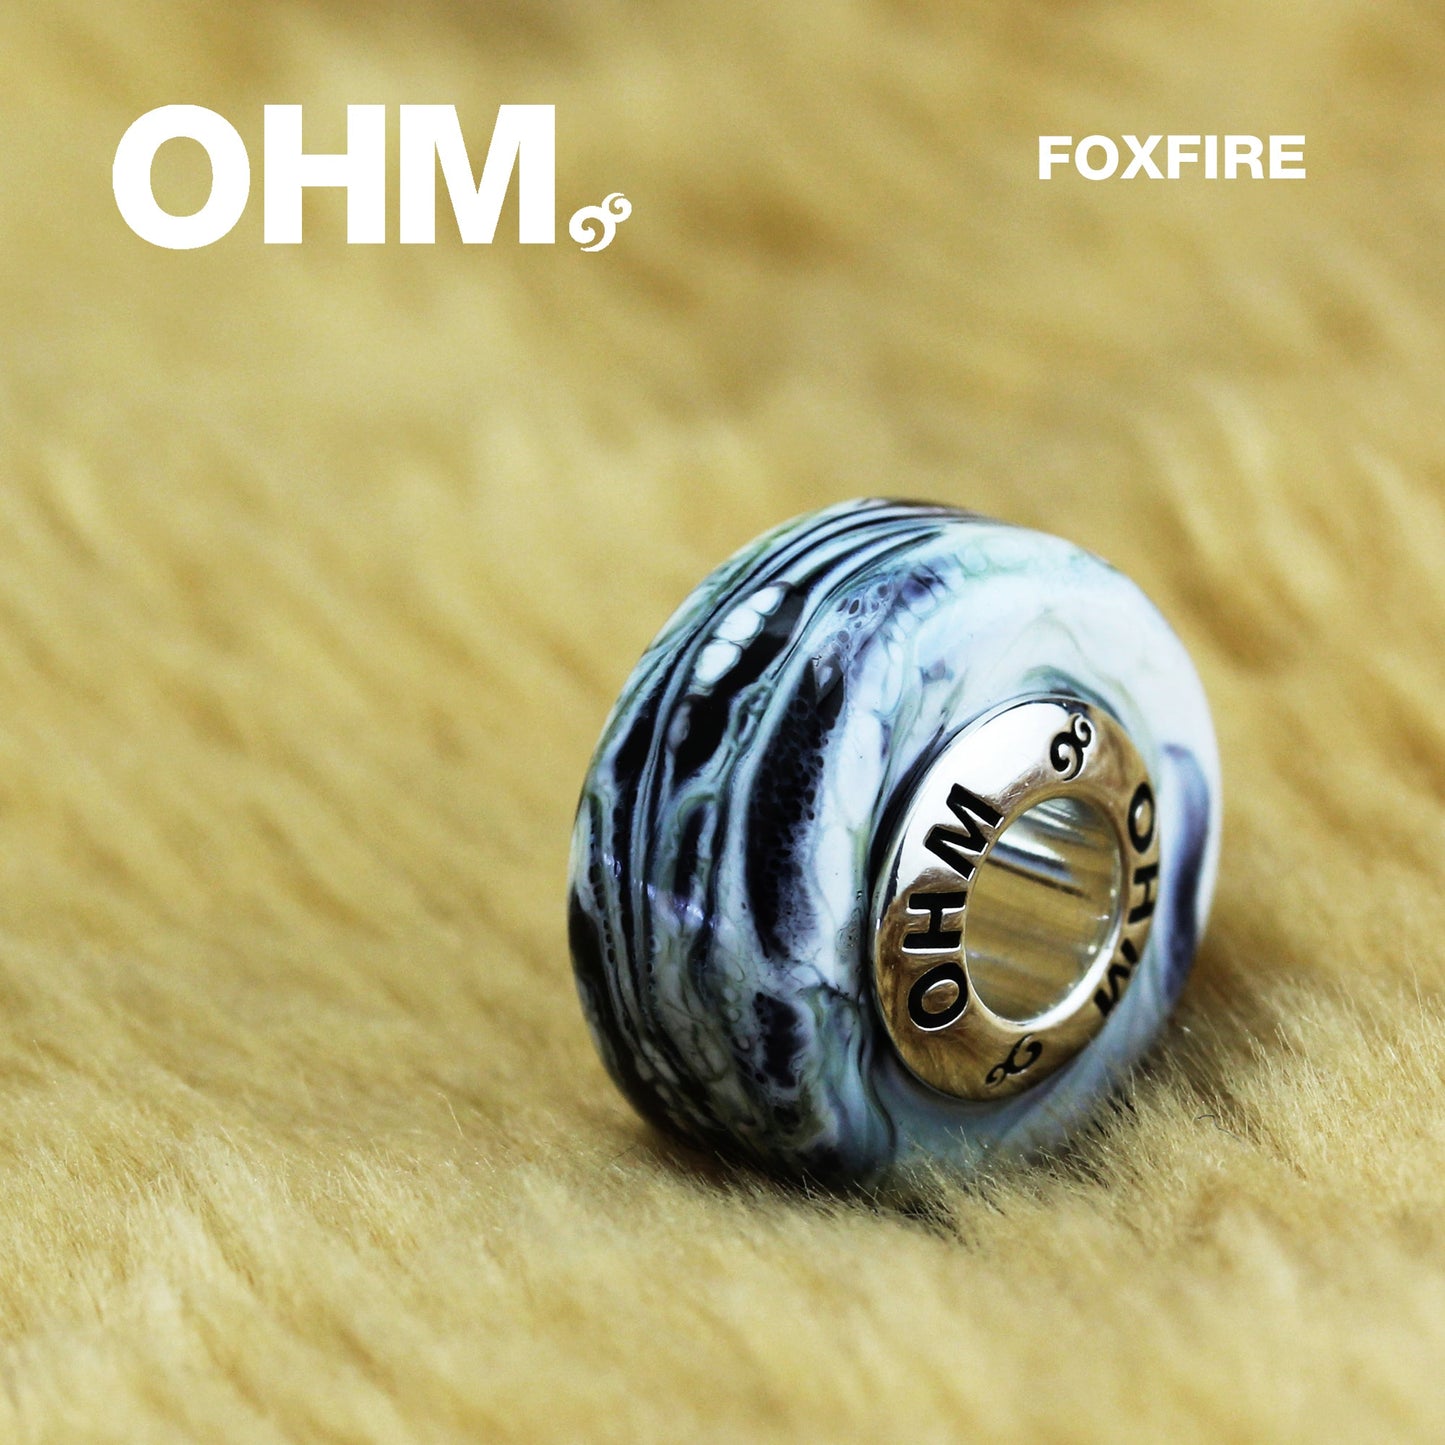 Foxfire - Limited Edition